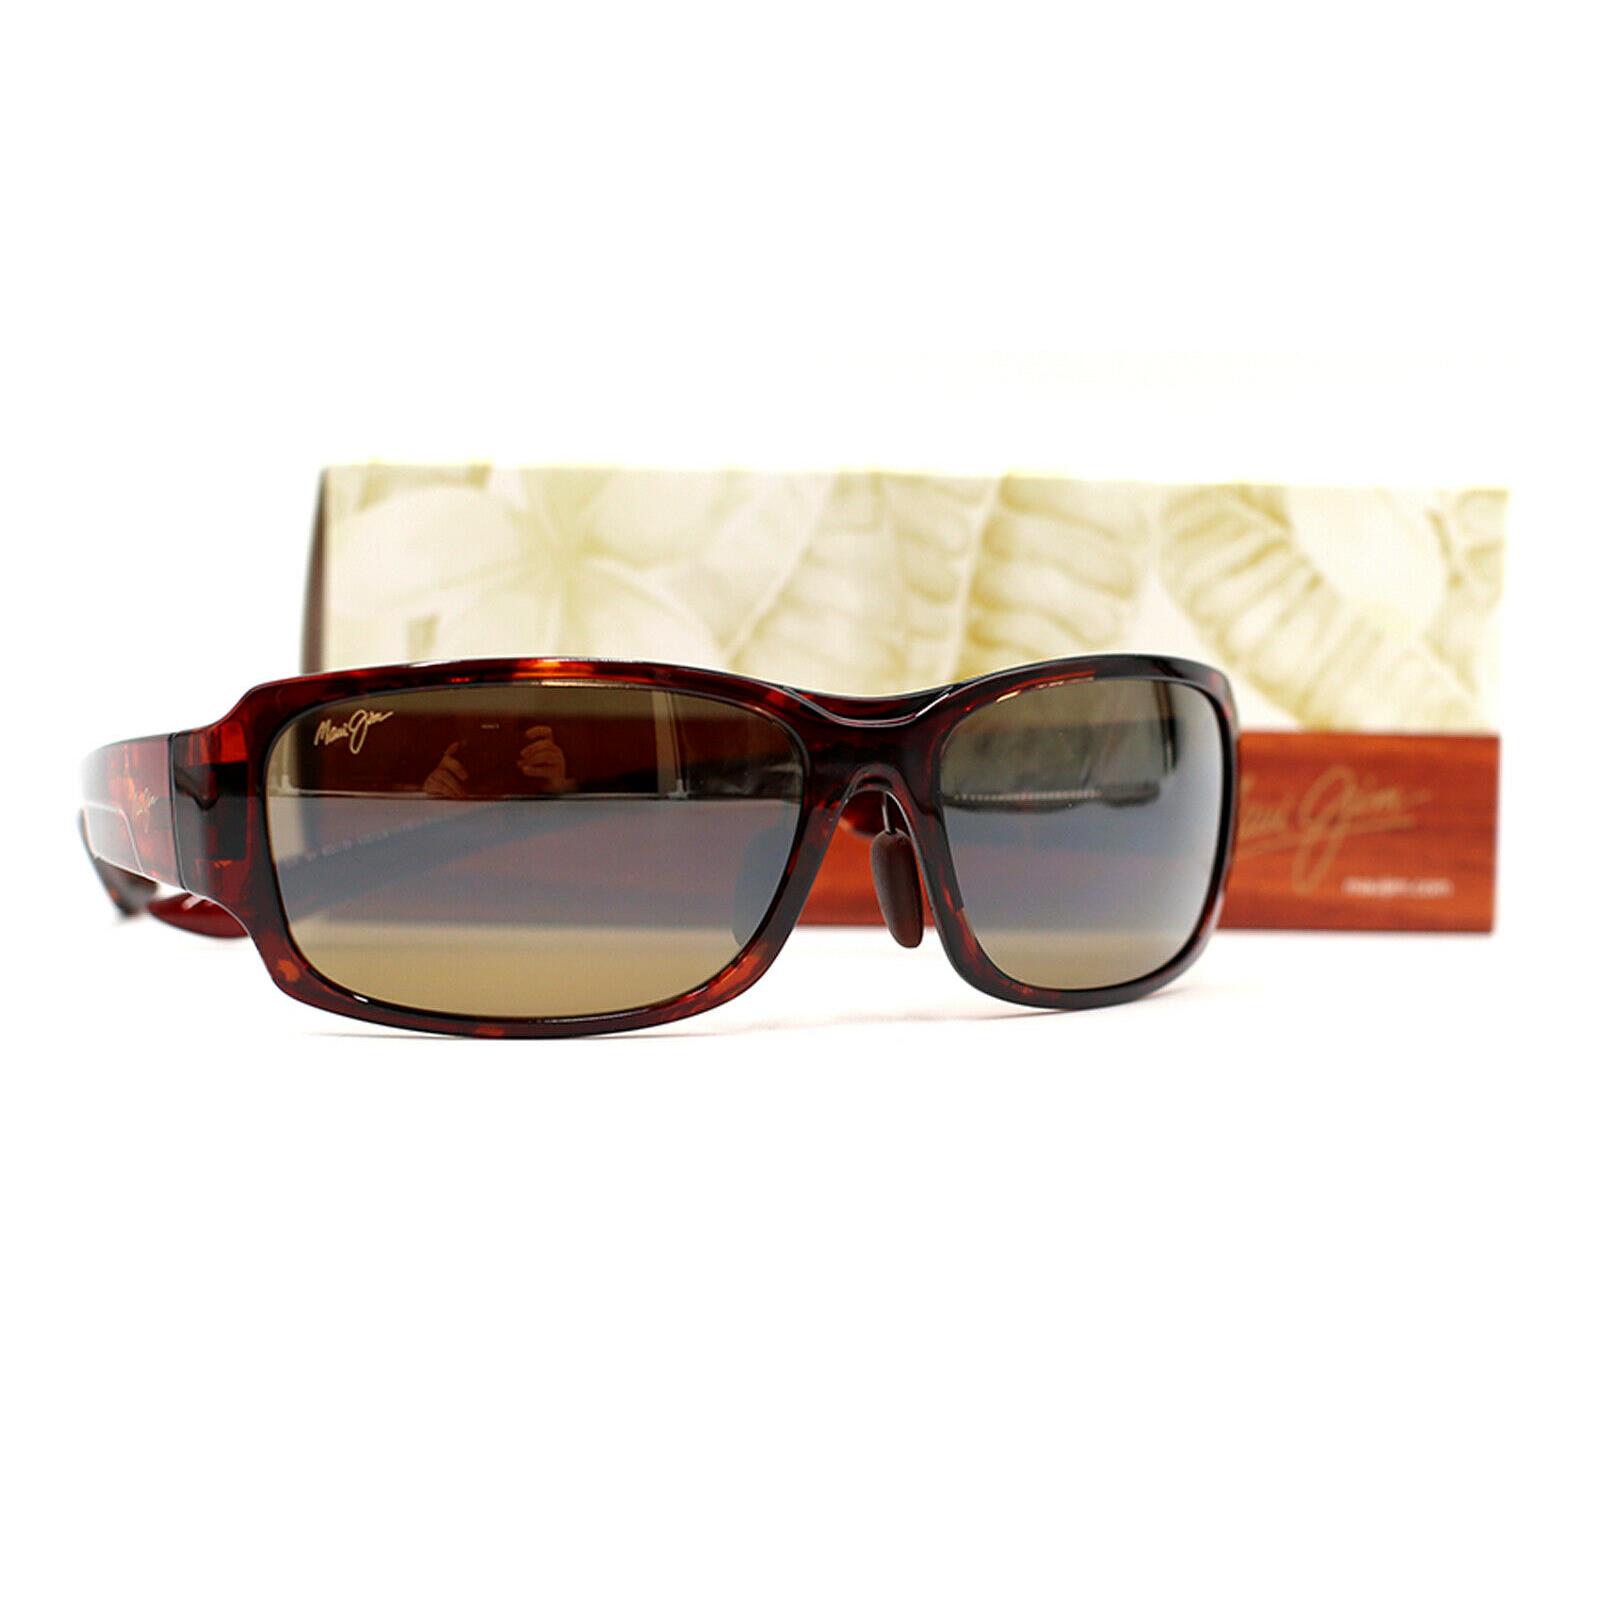 Maui Jim Monkeypod H441-10 Tortoise Brown Sunglasses Polarized Hcl Bronze Lenses